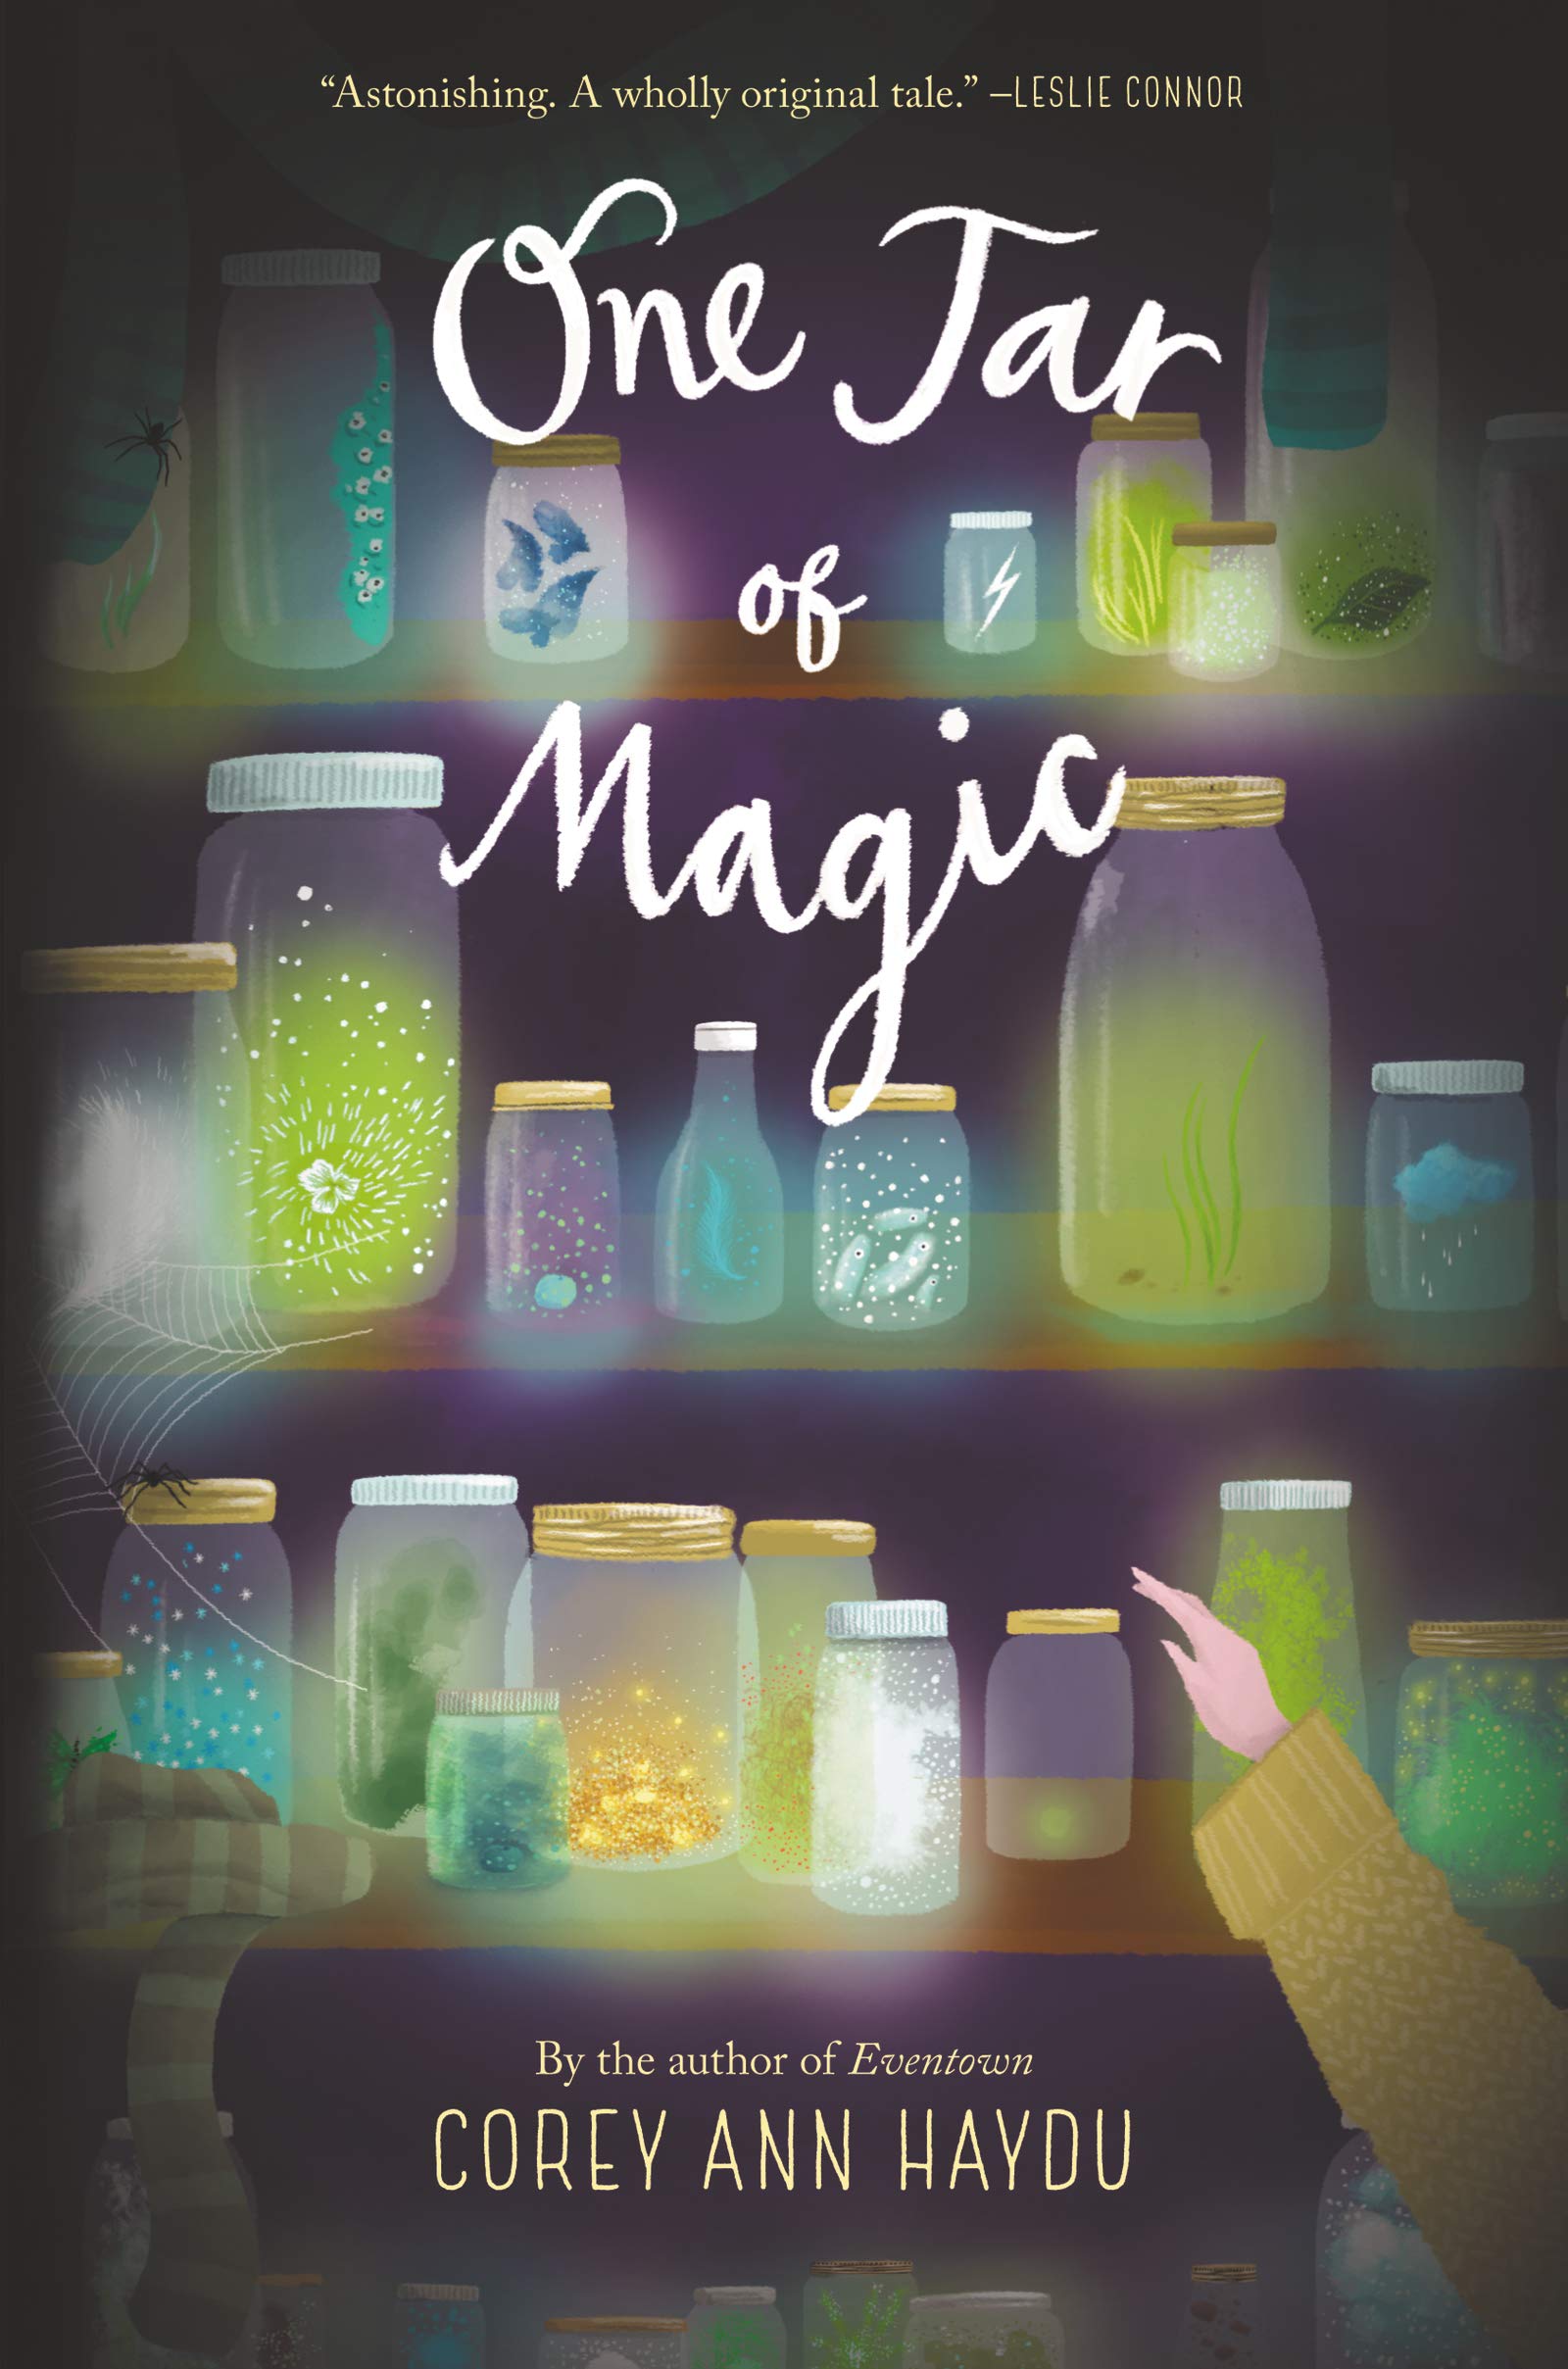 One Jar of Magic